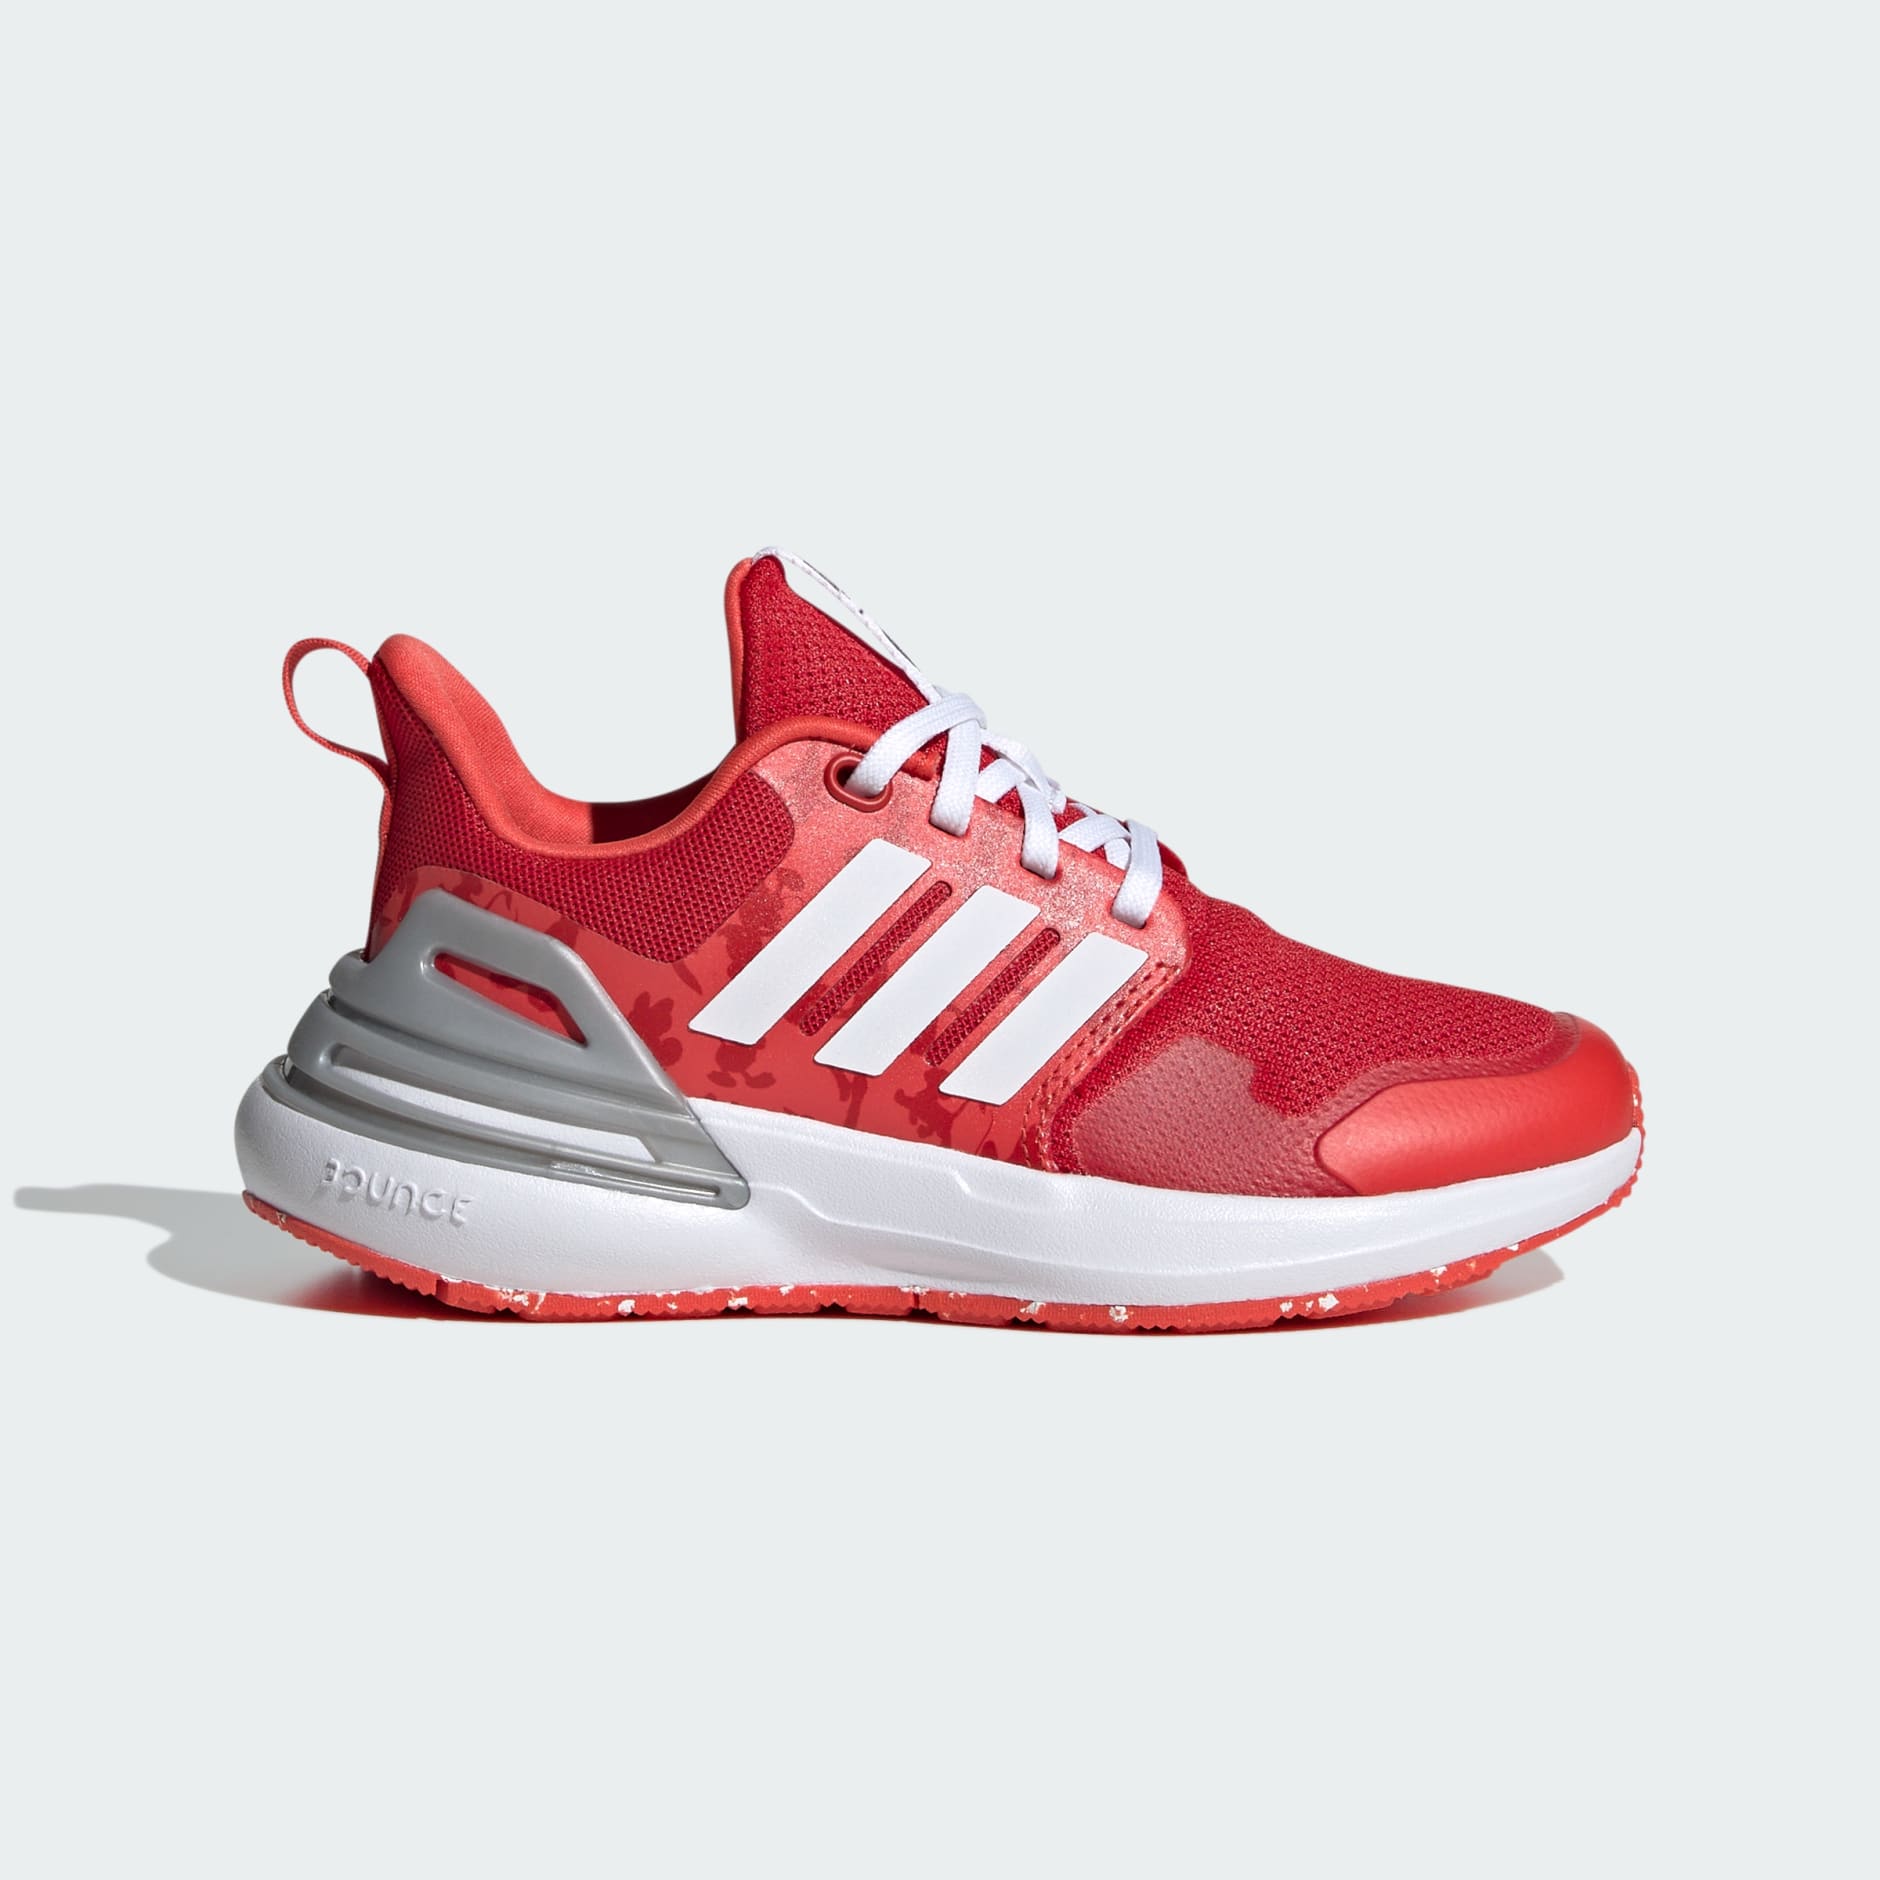 Buy Adidas Originals Gazelle Red Sneakers for Men at Best Price @ Tata CLiQ